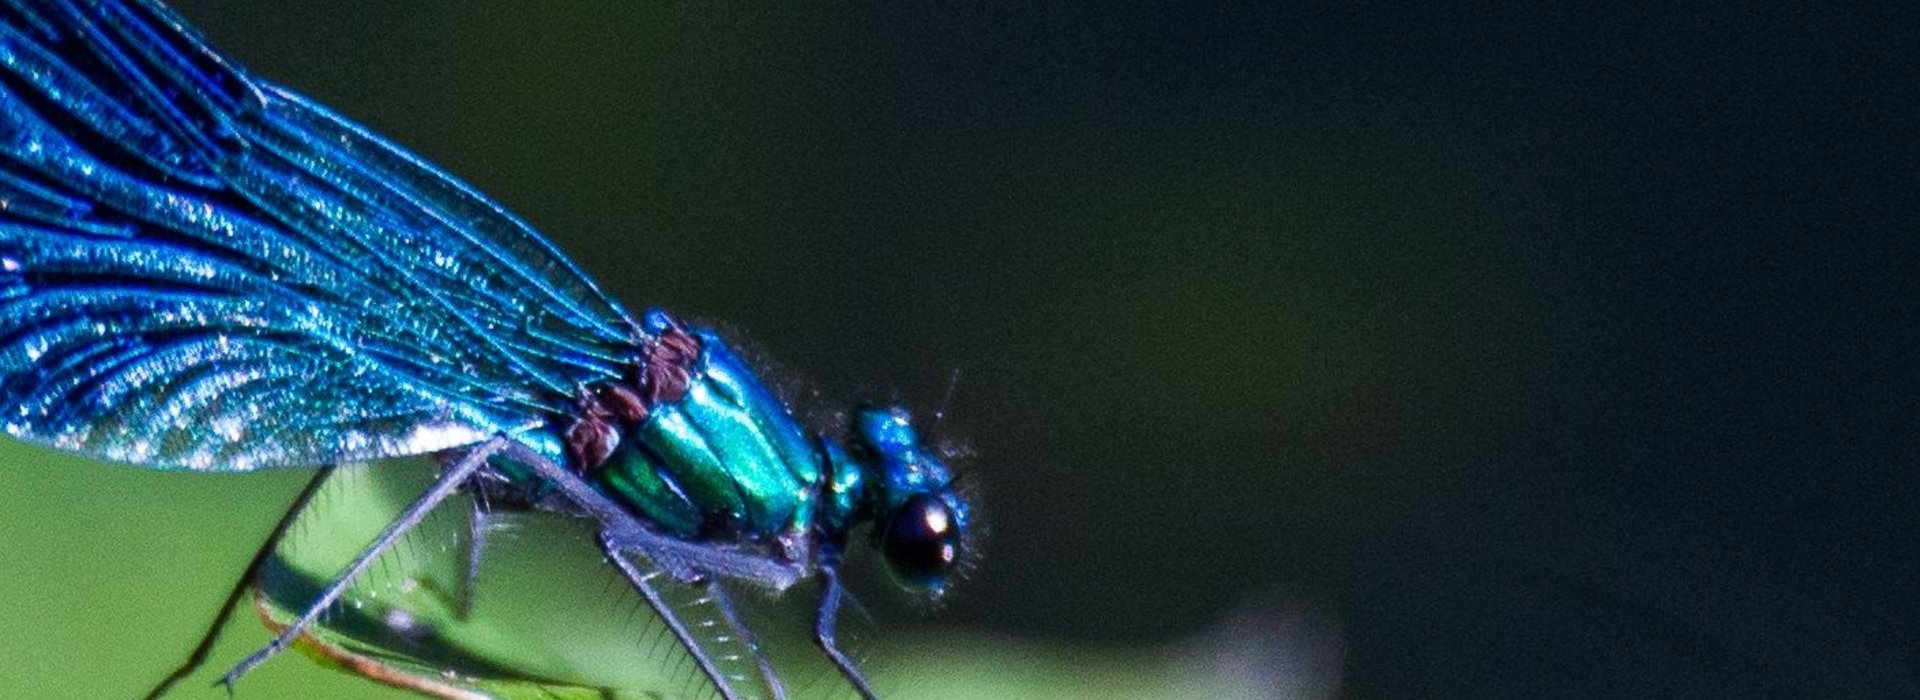 Libelle Detailansicht blau